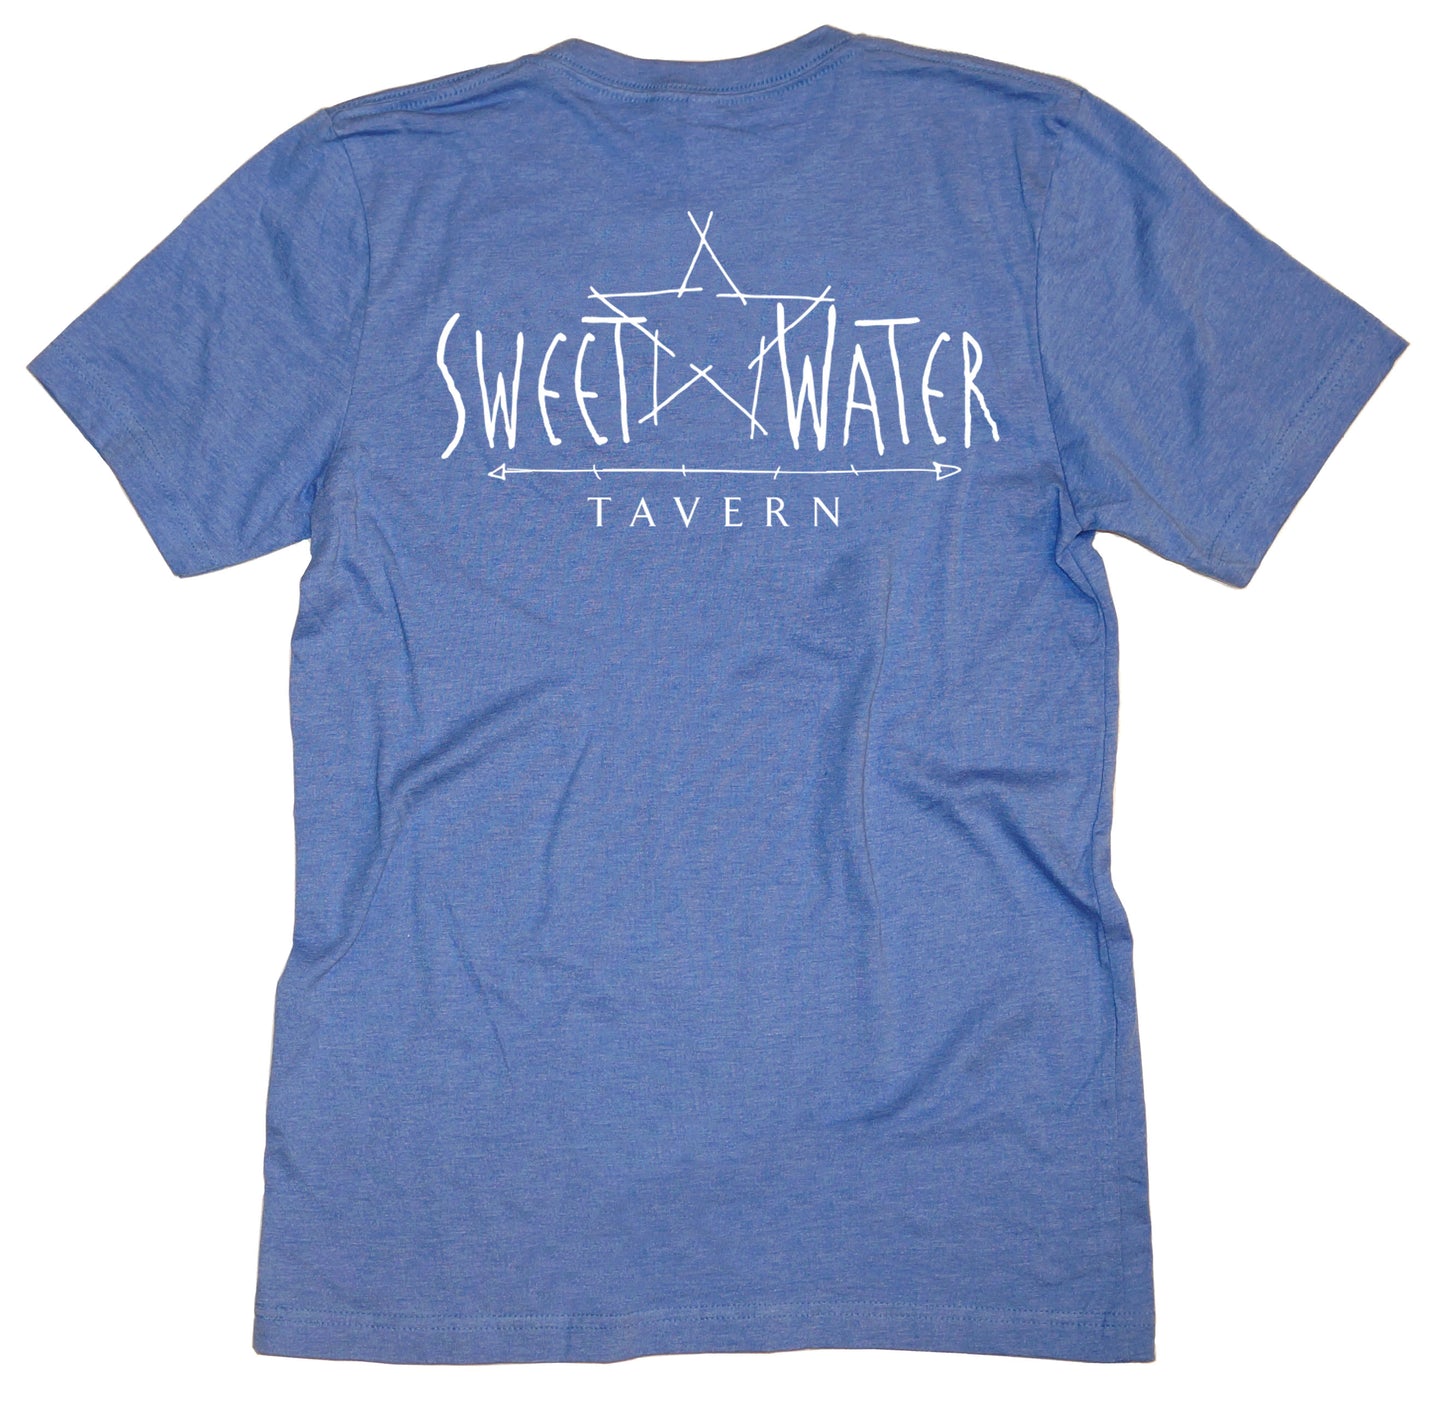 Sweetwater Tavern T-Shirt